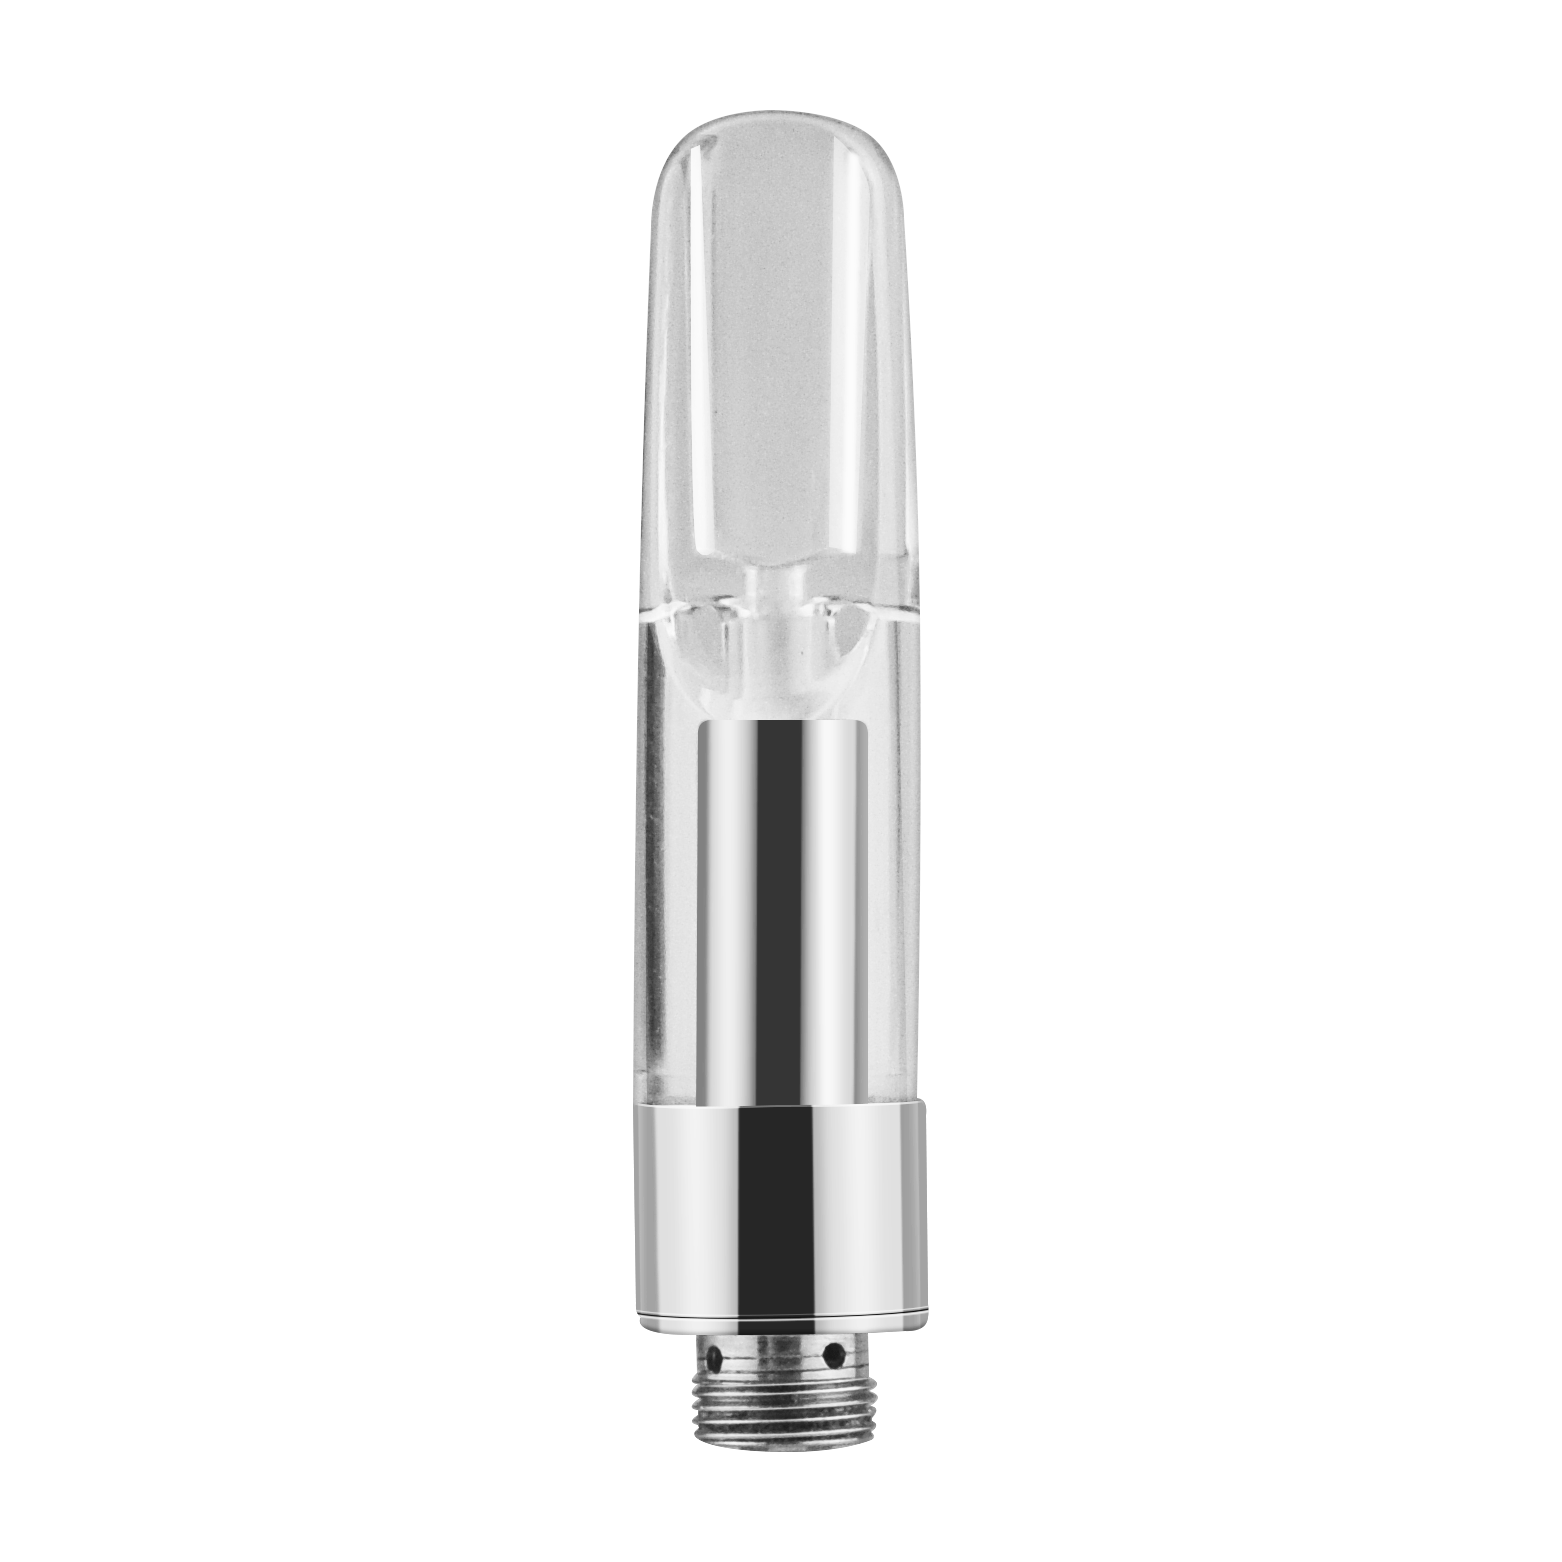 0.5mL DM 016 510 thread vape cartridge with silver base